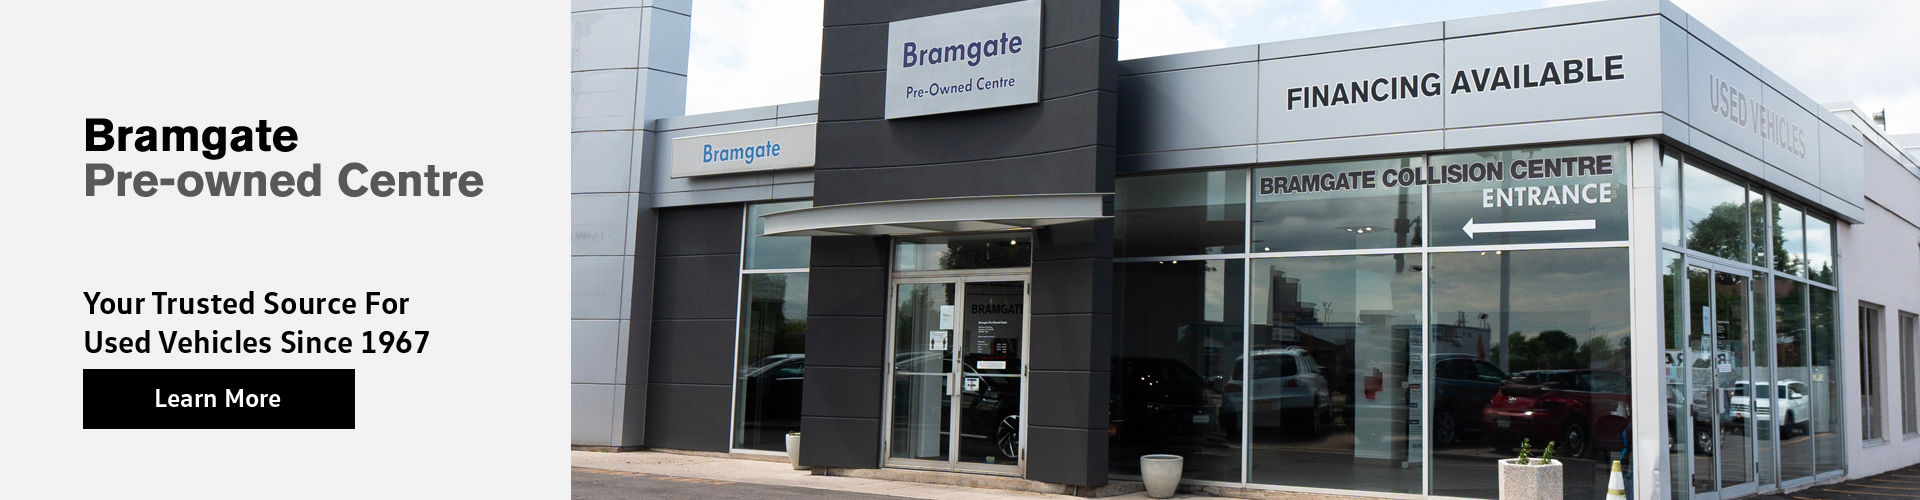 Bramgate Volkswagen Pre-Owned Centre